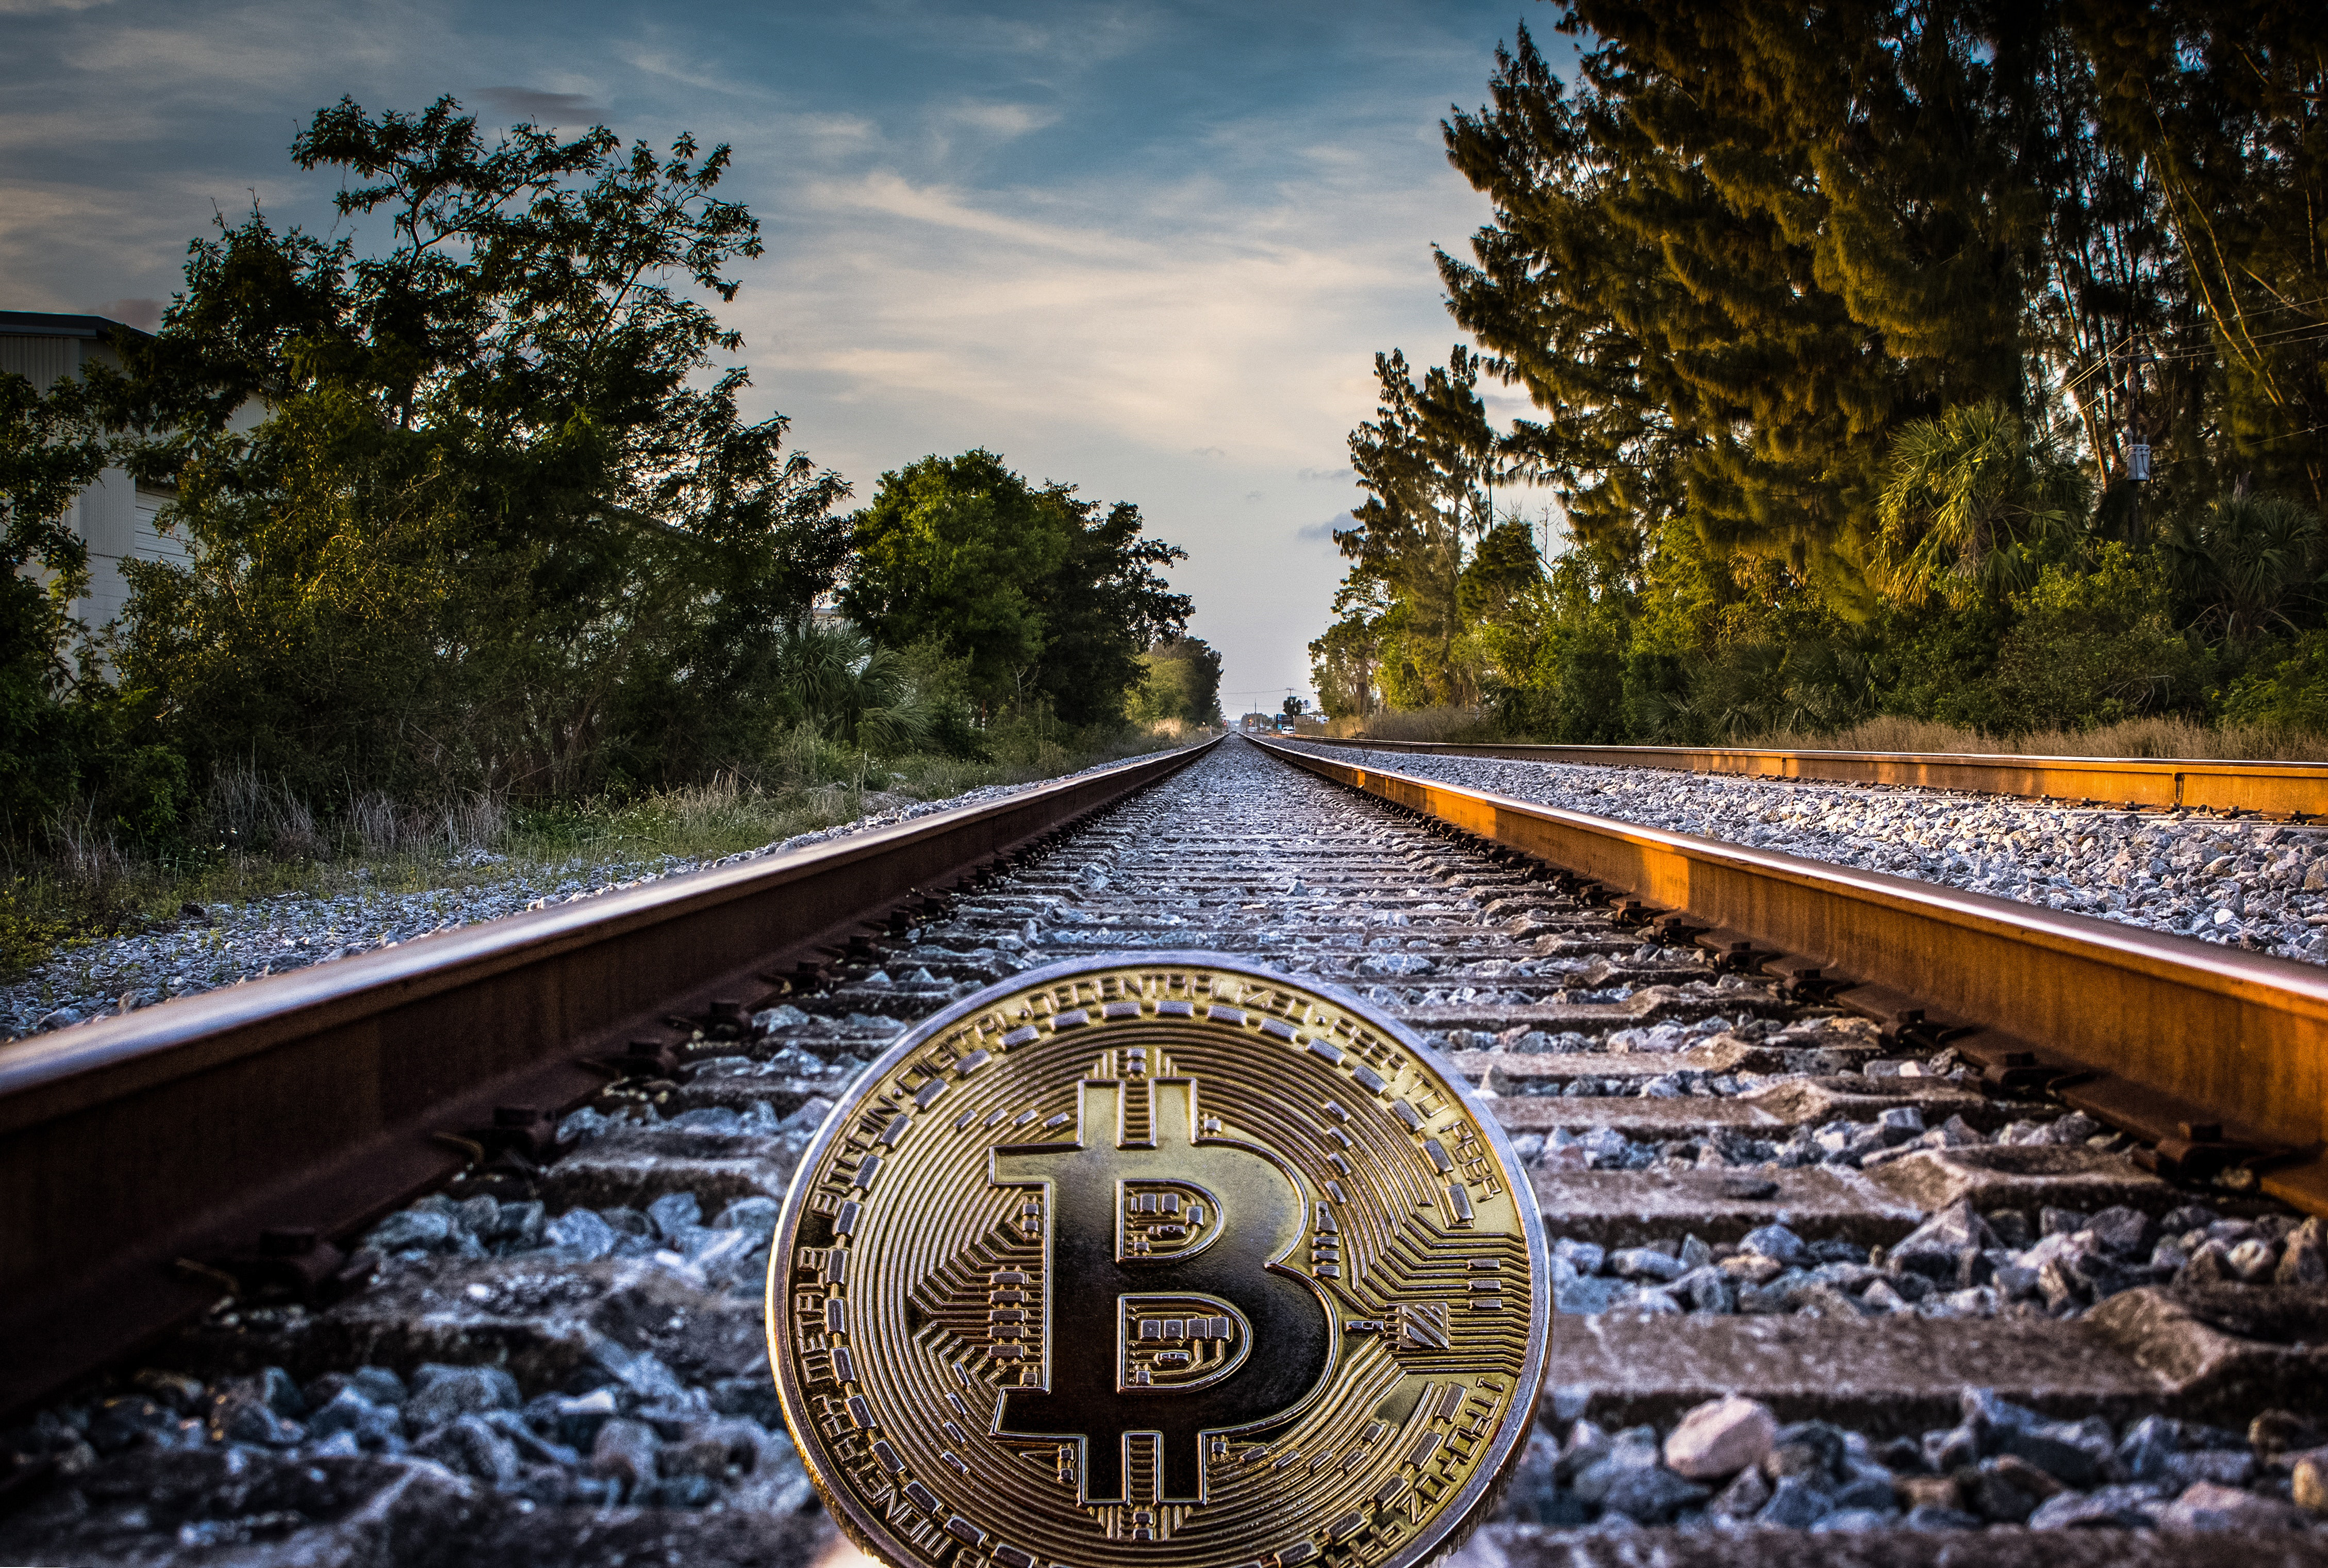 Bitcoin on railway tracks image - Free stock photo - Public Domain photo - CC0 Images